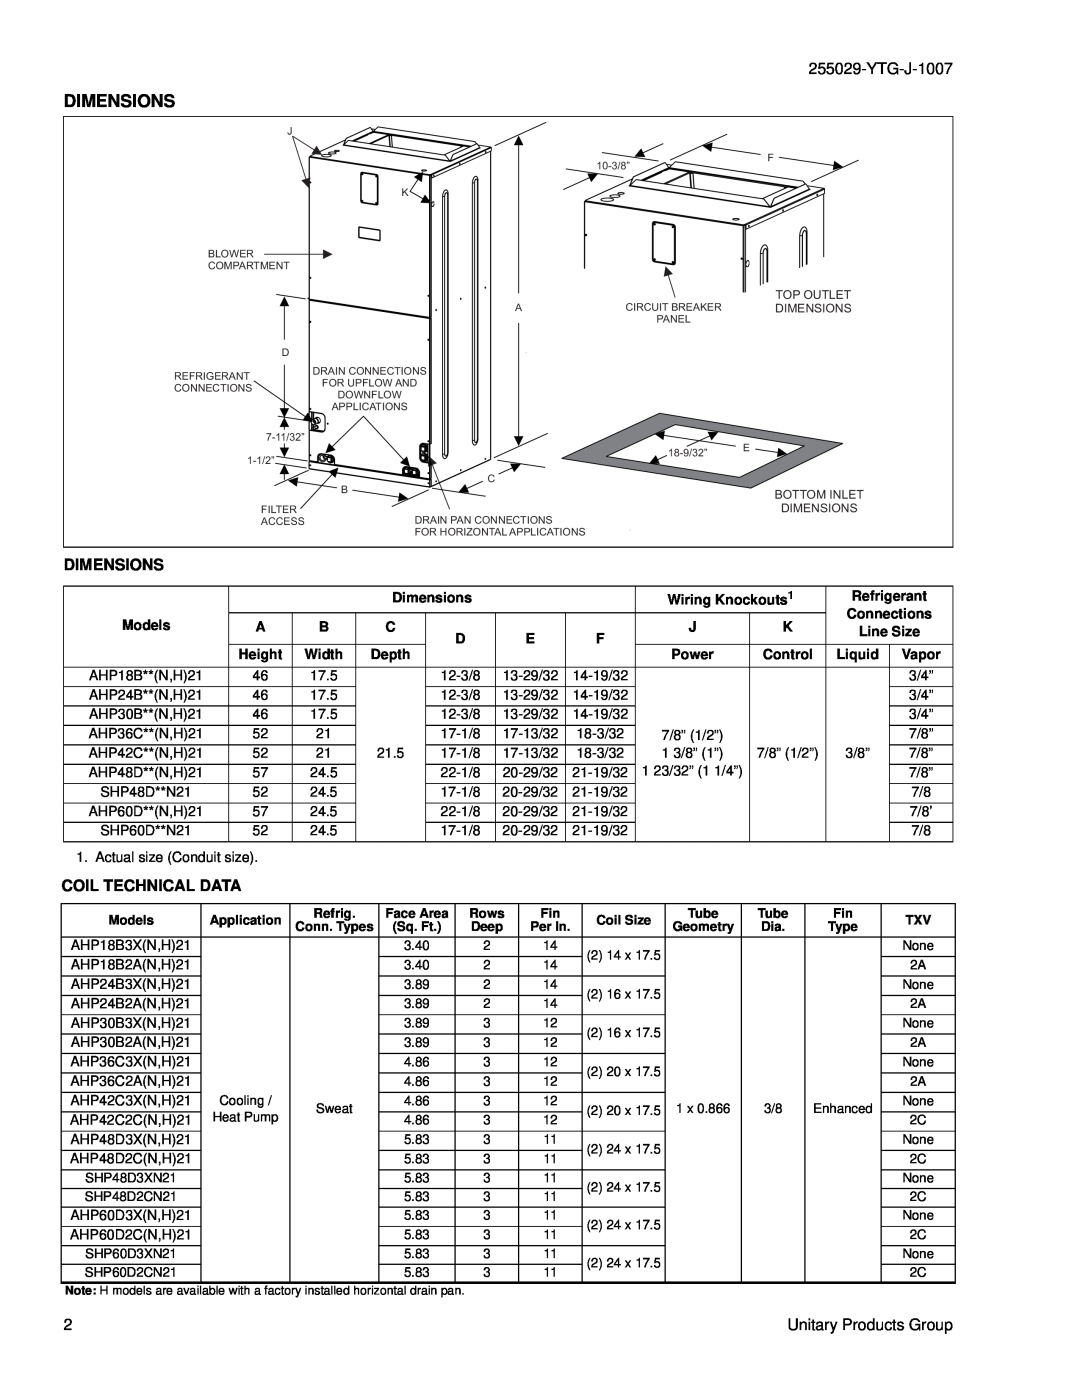 York SHP48 THRU 60, AHP18 THRU 60 specifications Dimensions, Coil Technical Data 